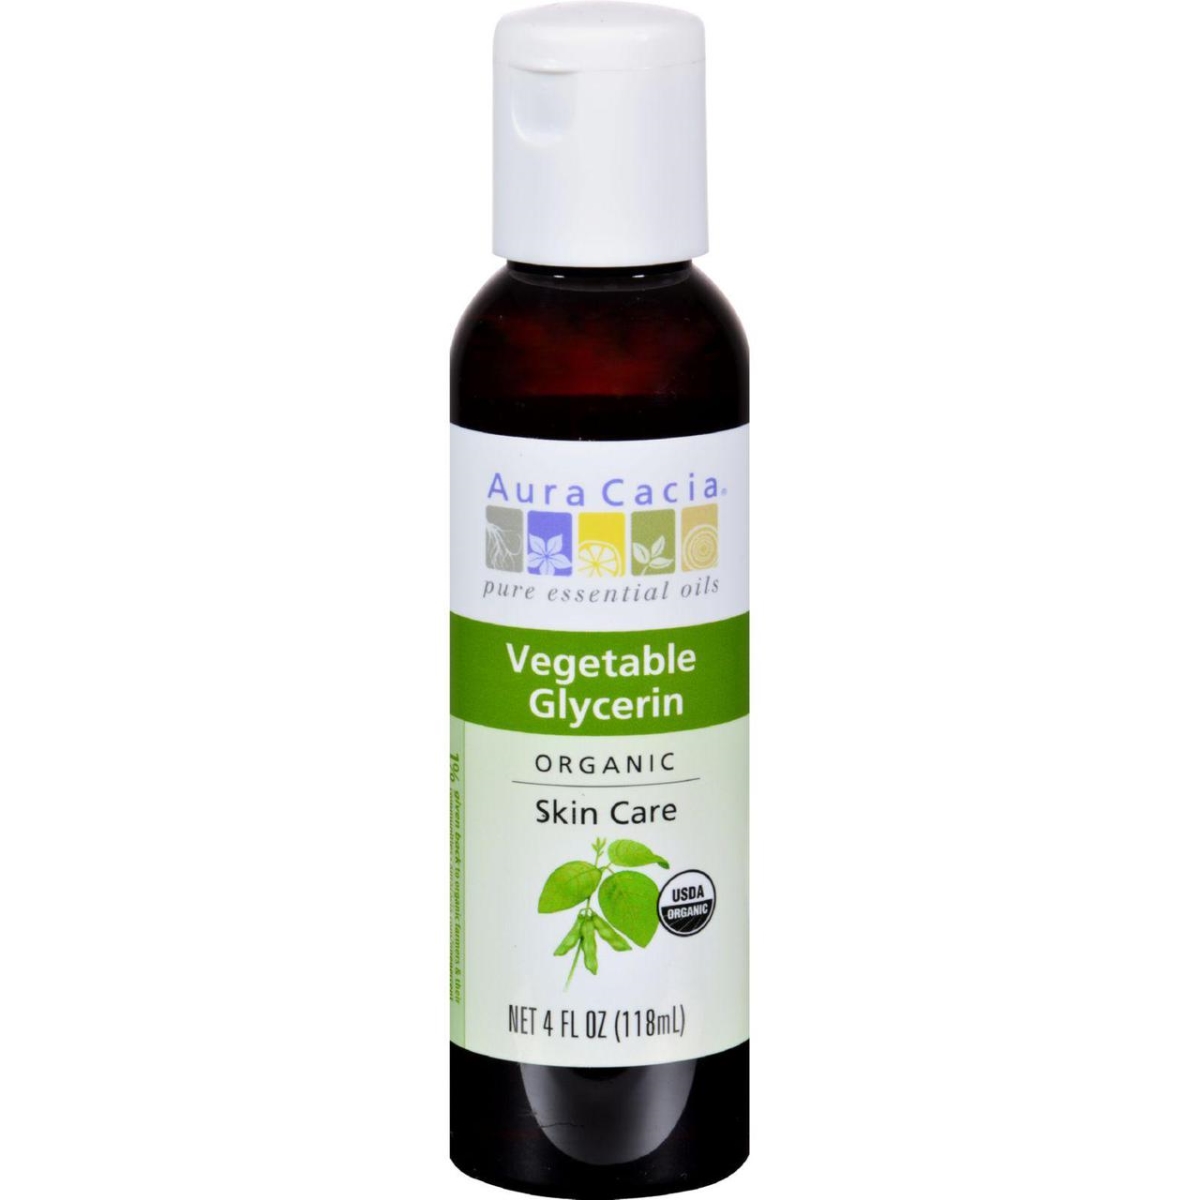 Hg1571876 4 Fl Oz Organic Vegetable Glycerin Skin Care Oil